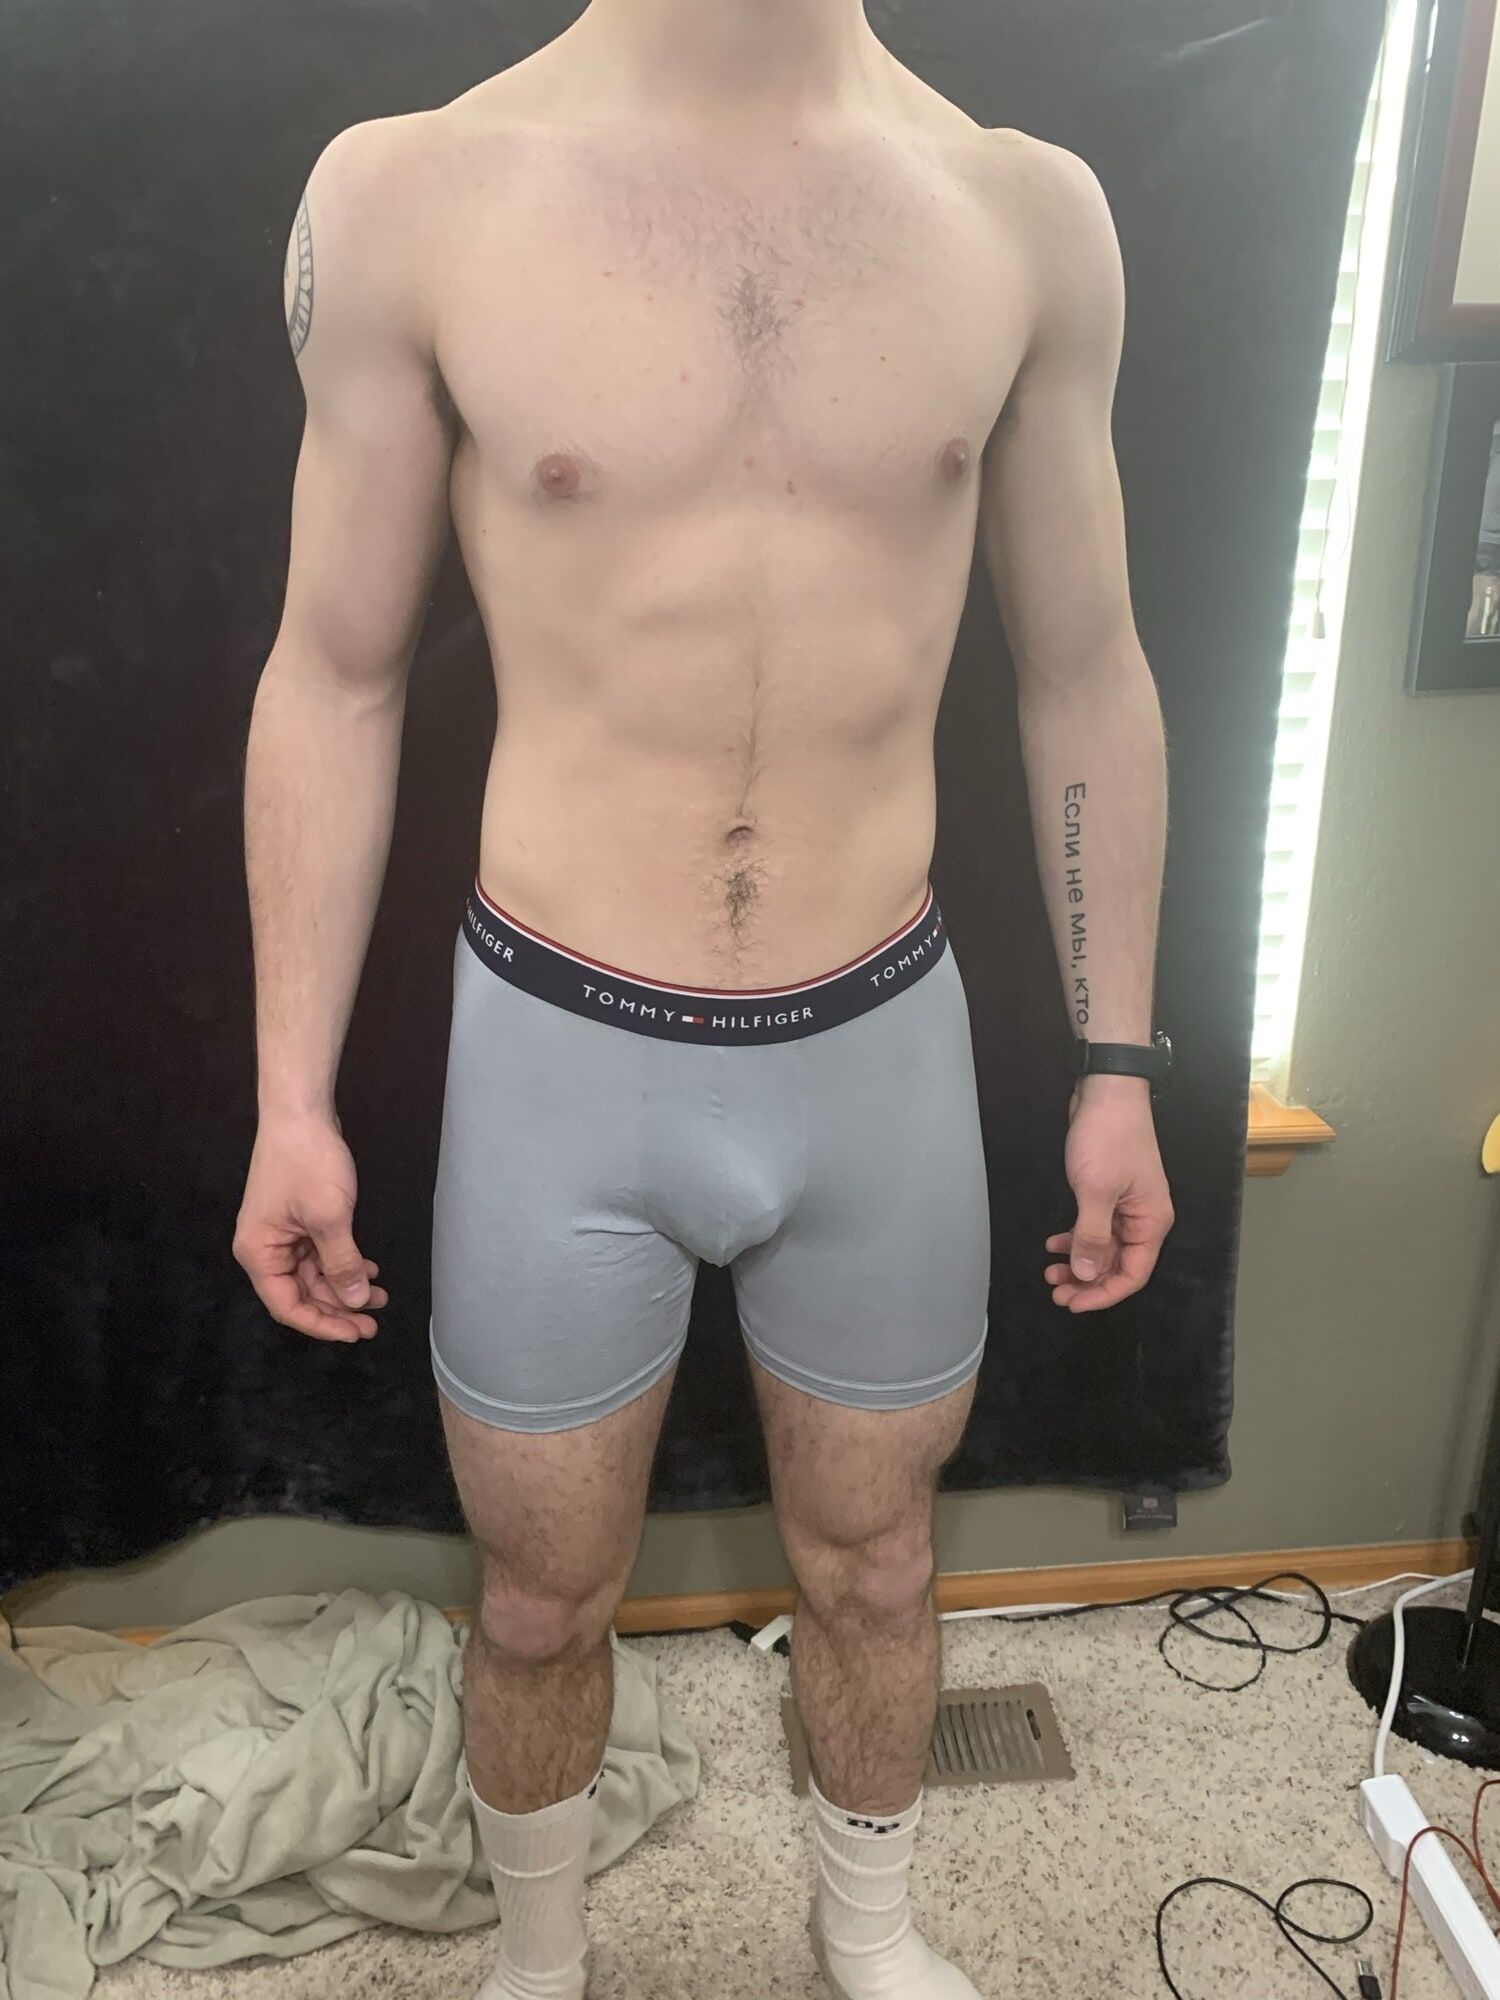 More showing off in undies! #38